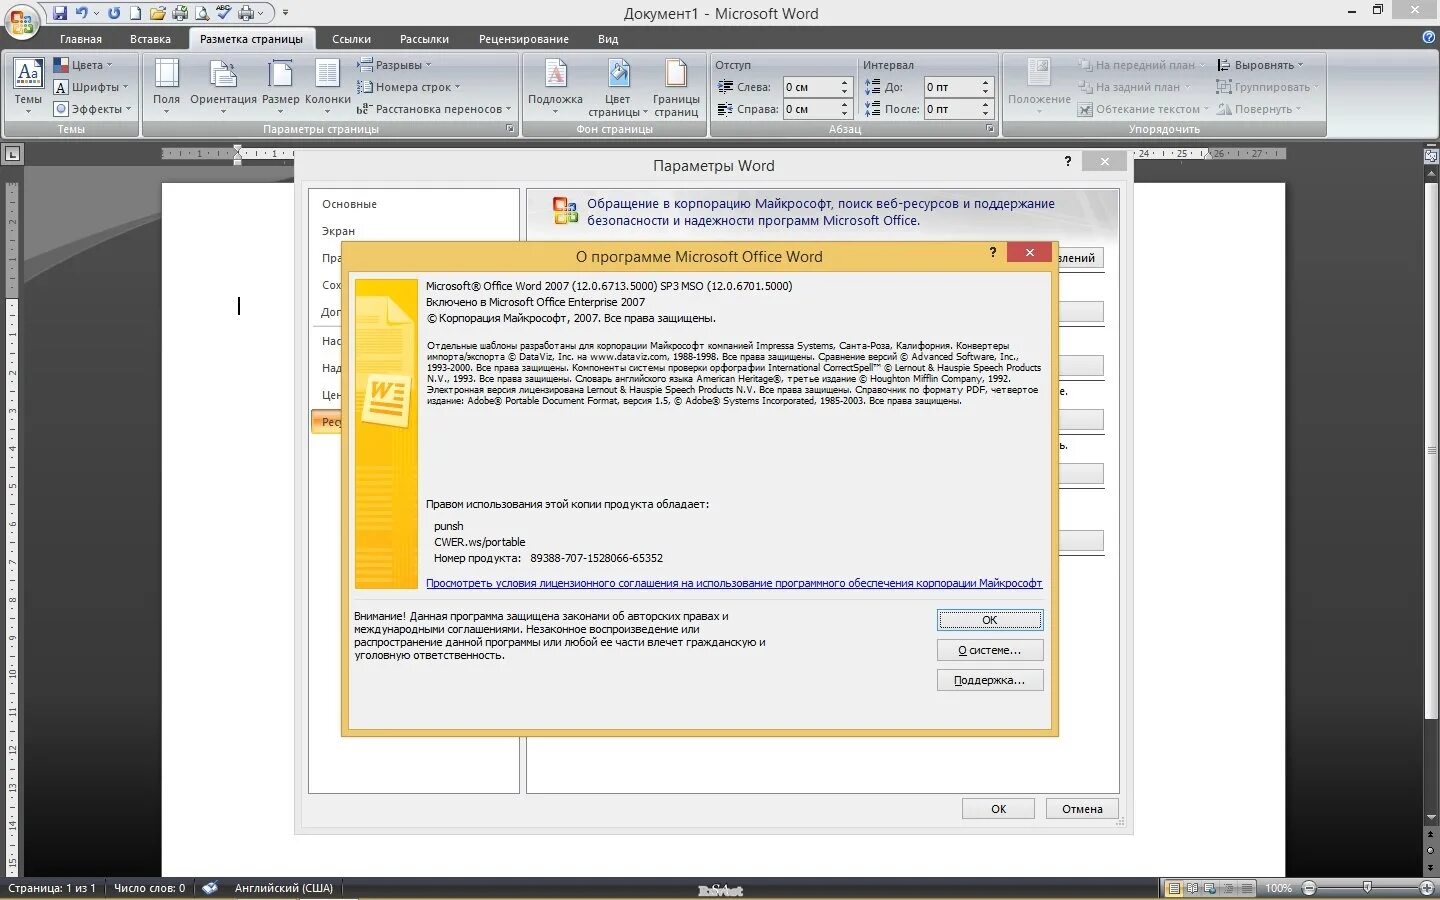 Microsoft Office Standard 2007. Microsoft Office Enterprise 2007. MS Office 2007 версии. Офис 2007 Интерфейс.